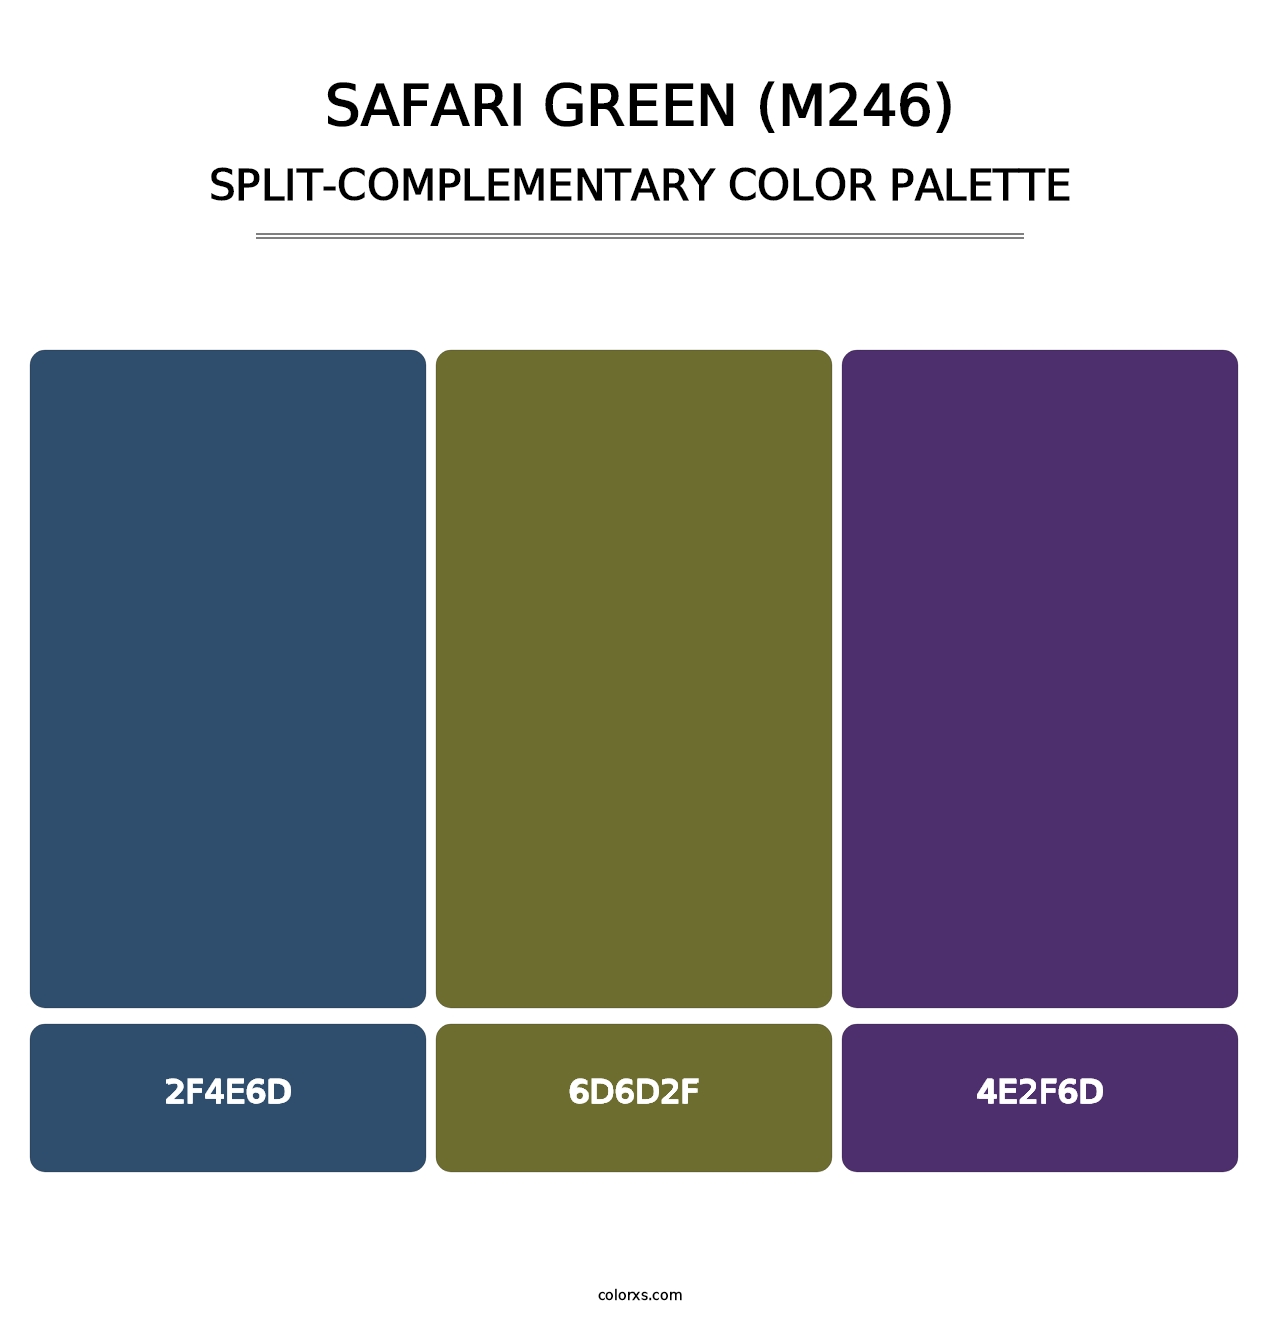 Safari Green (M246) - Split-Complementary Color Palette